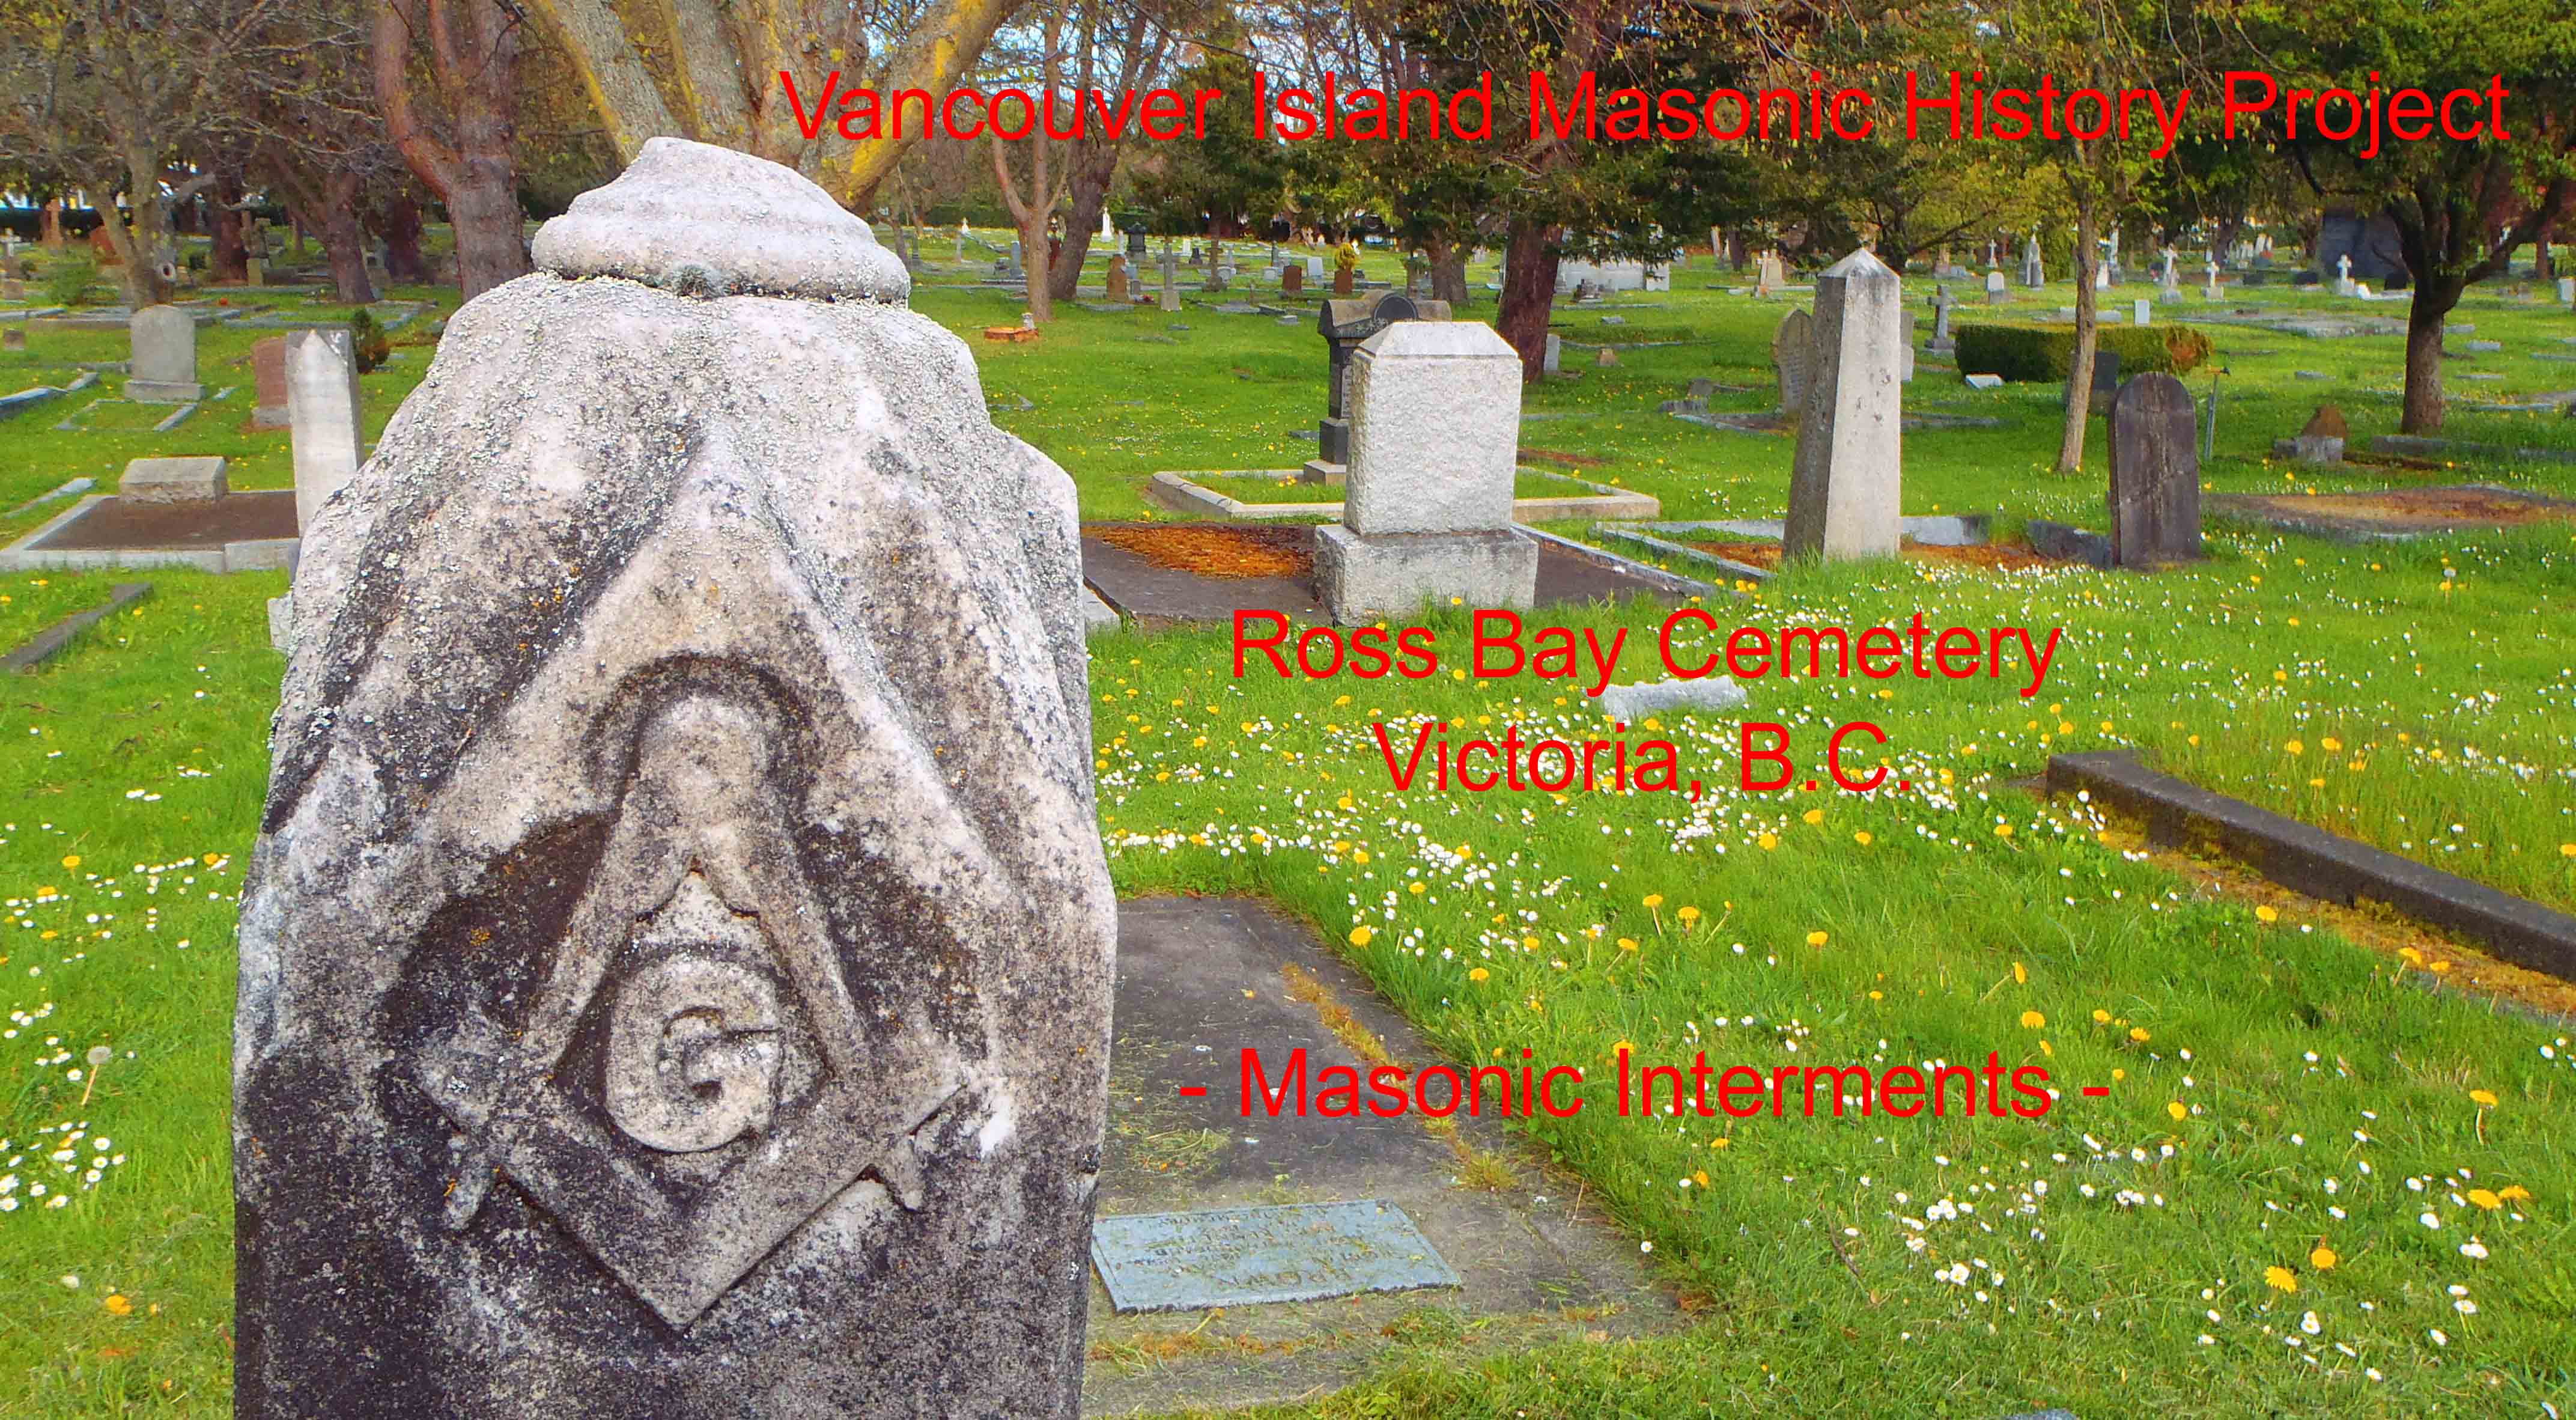 Ross Bay Cemetery - Masonic Interments